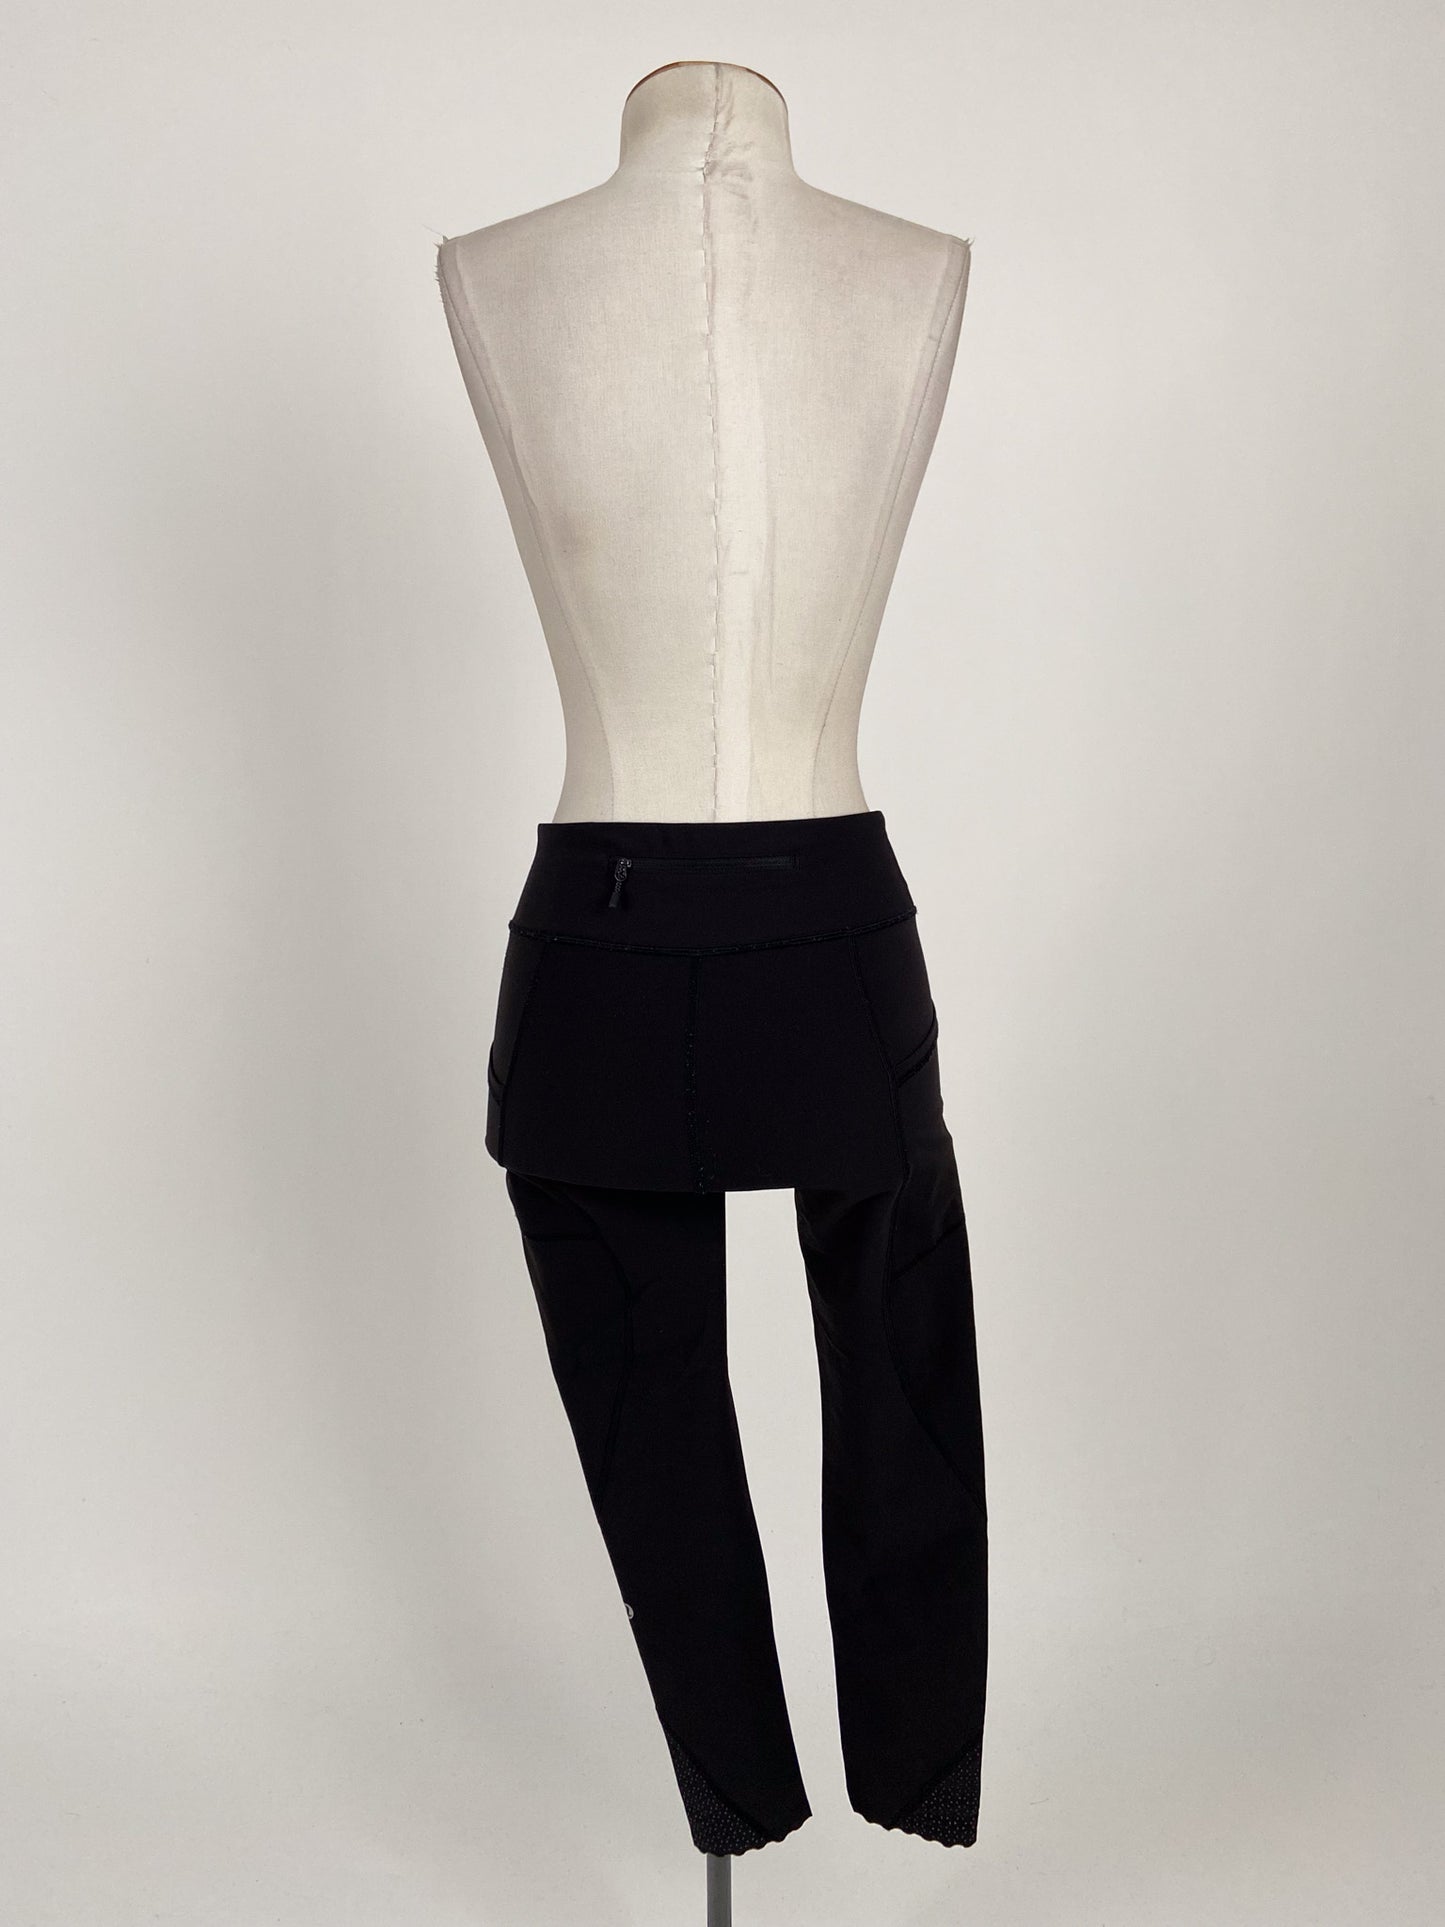 Lululemon | Black Casual Activewear Bottom | Size 6